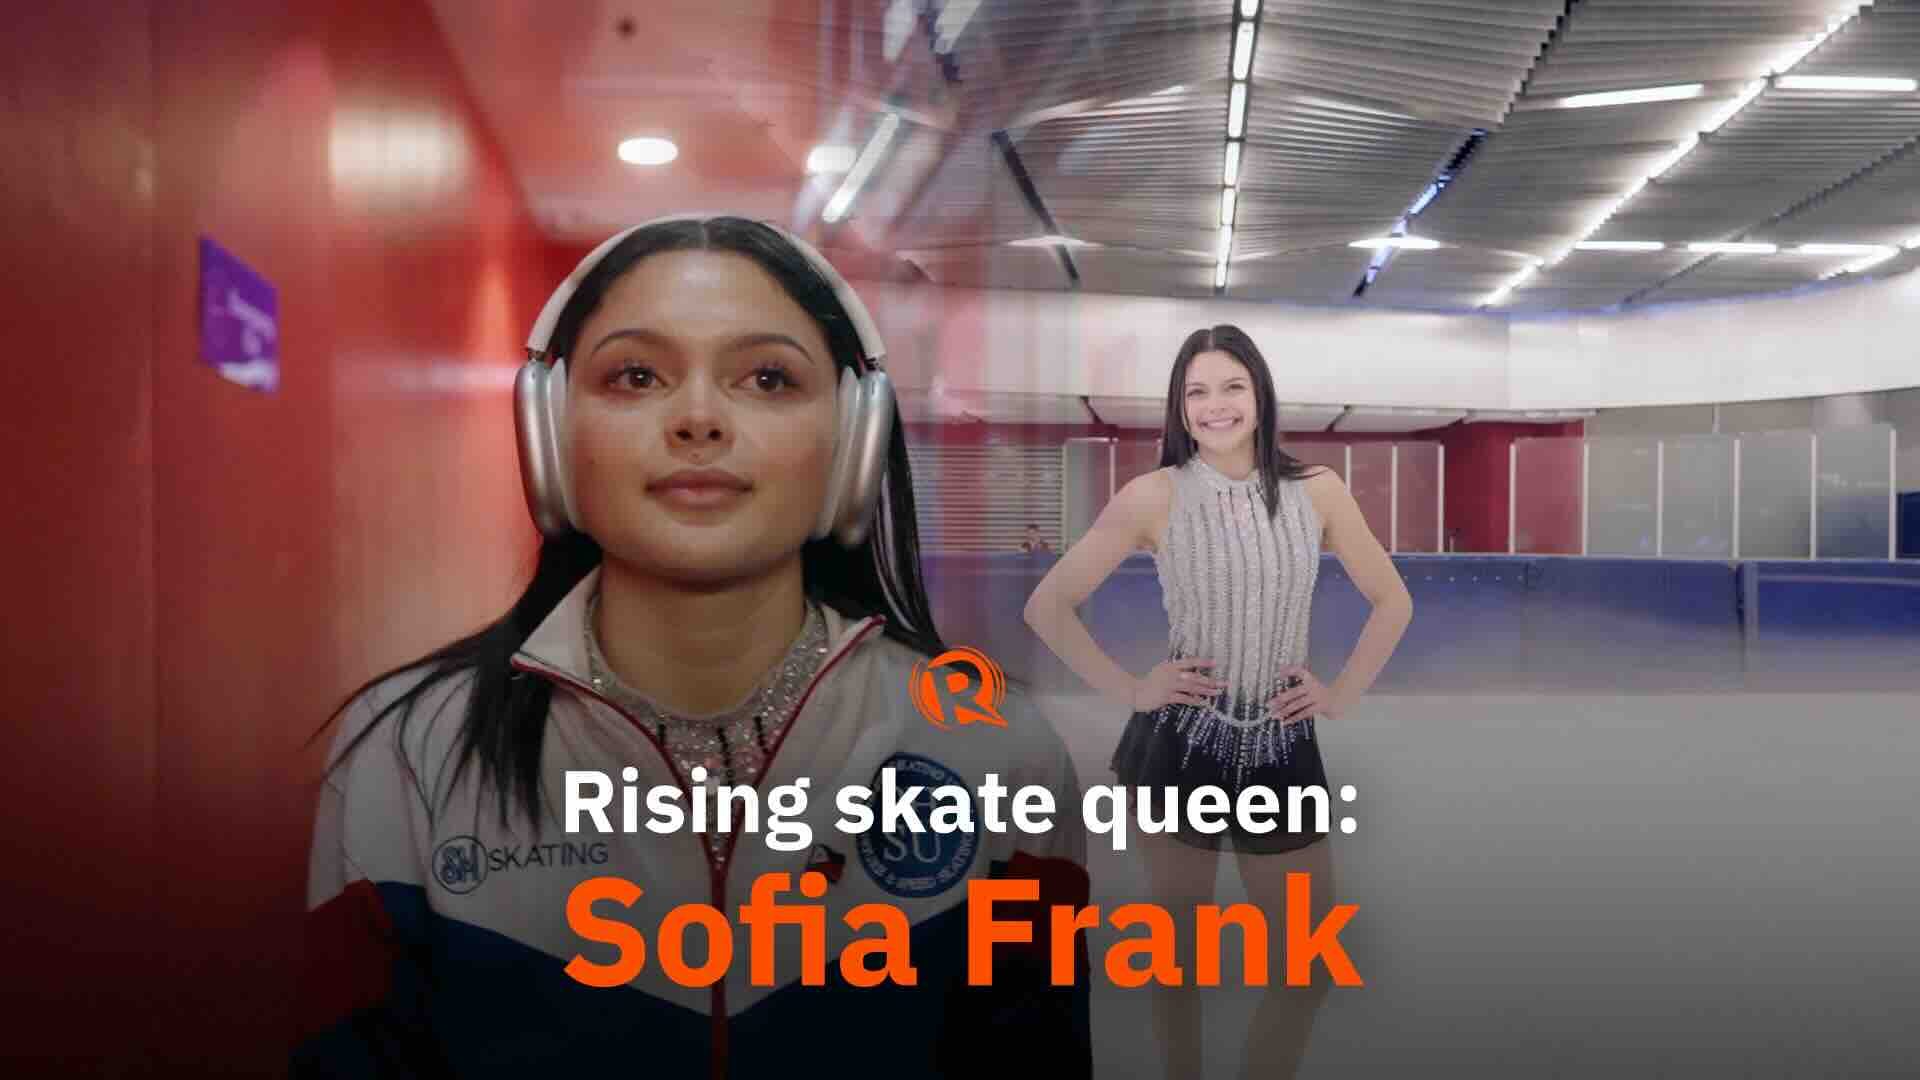 [WATCH] Rising skate queen: Sofia Frank